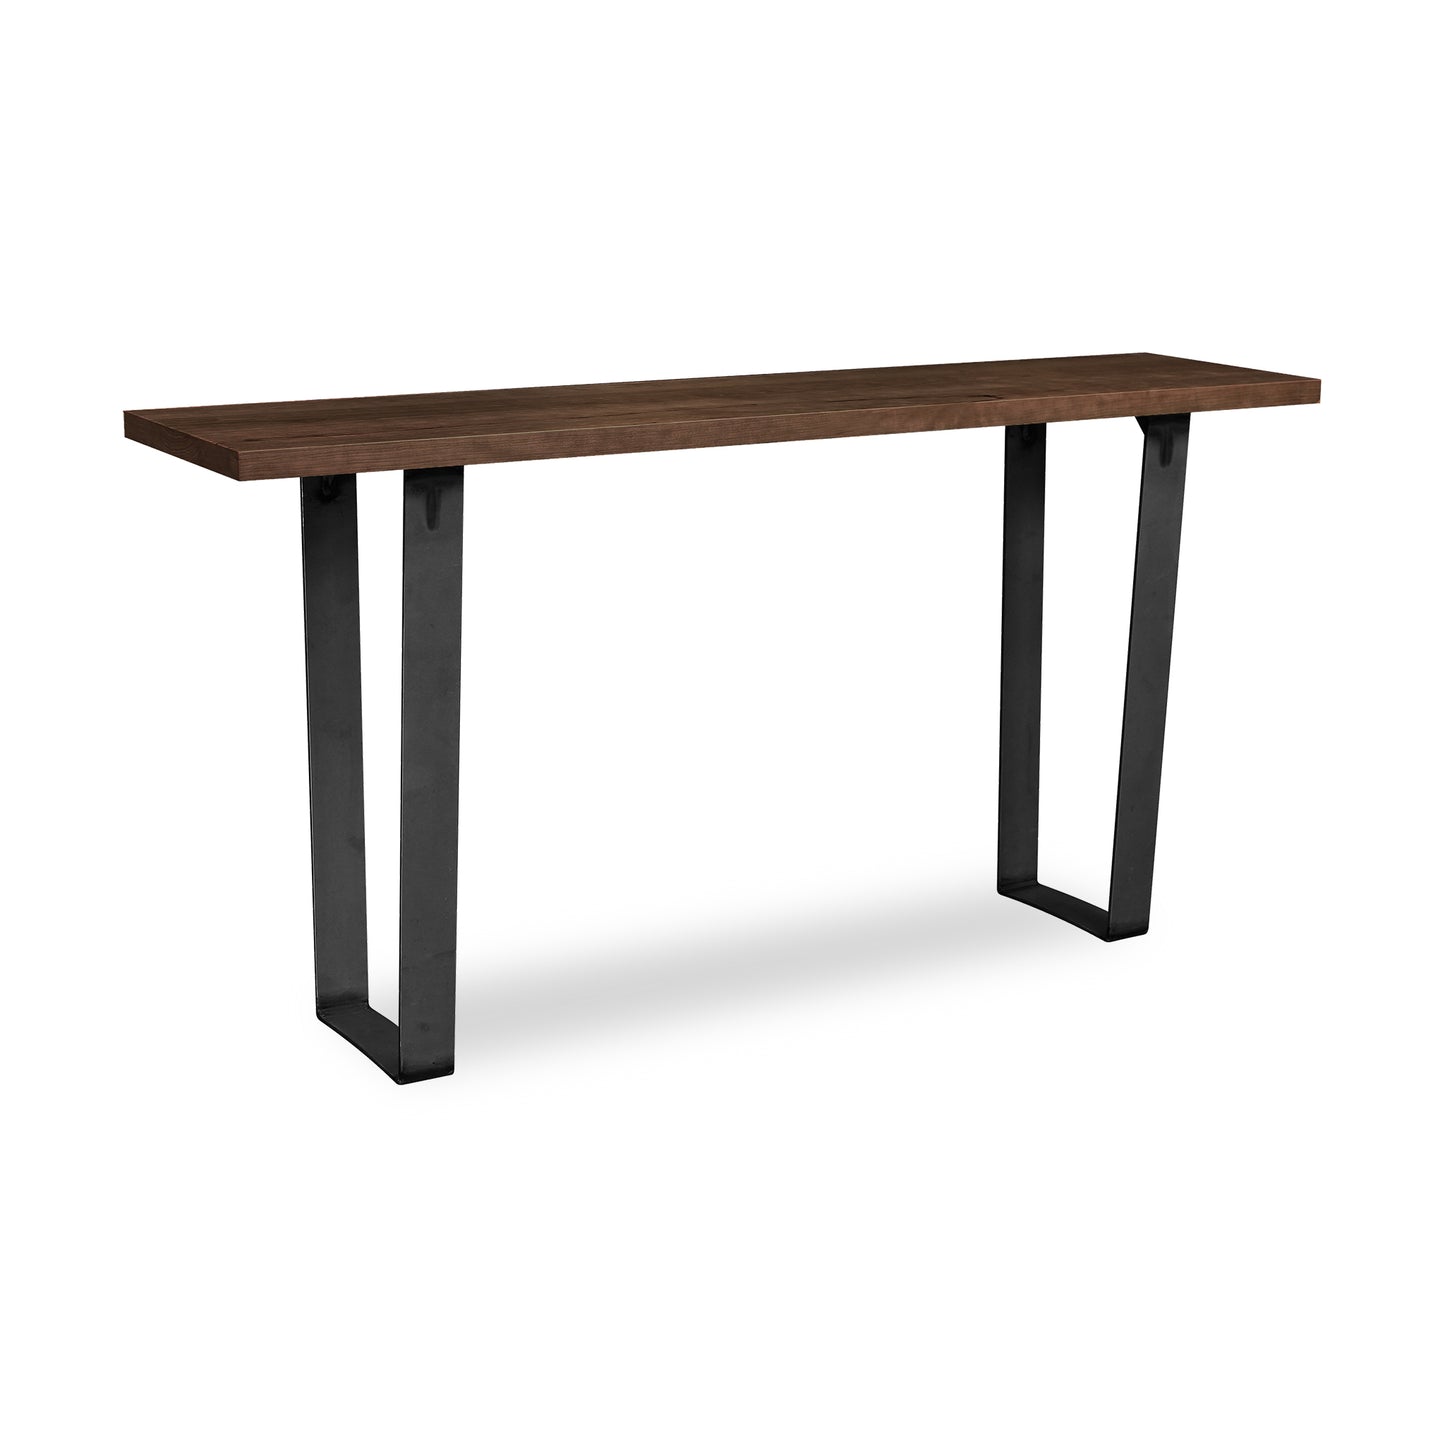 A Metropolitan Sofa Table with Lyndon Furniture steel legs and a walnut top.